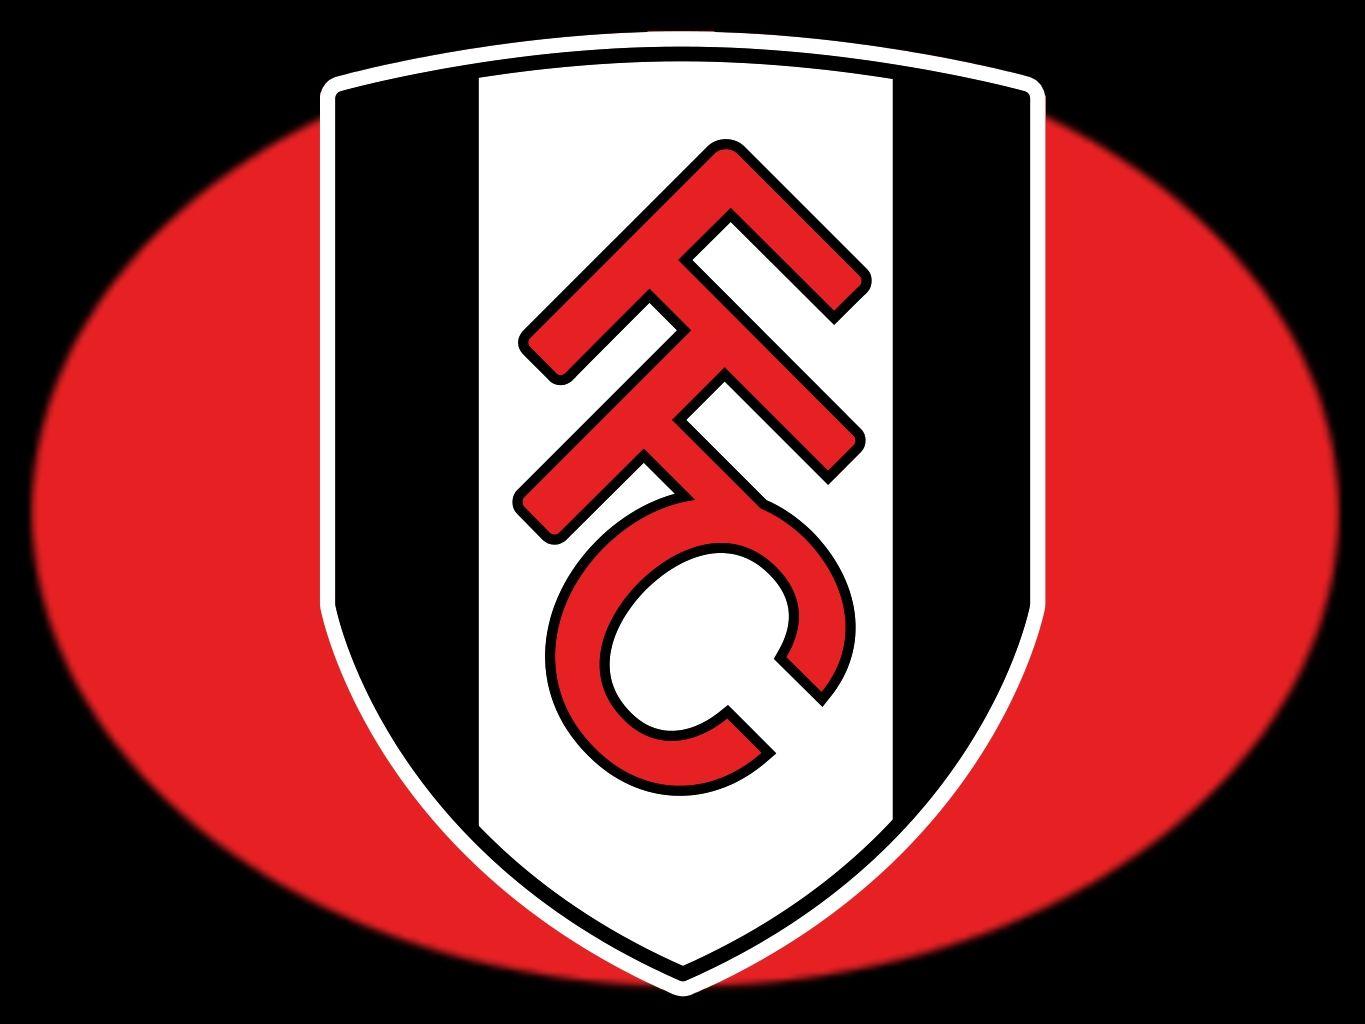 Professional Football Club Logo - English Premier League 2011 2012: Fixtures Of Fulham Football Club